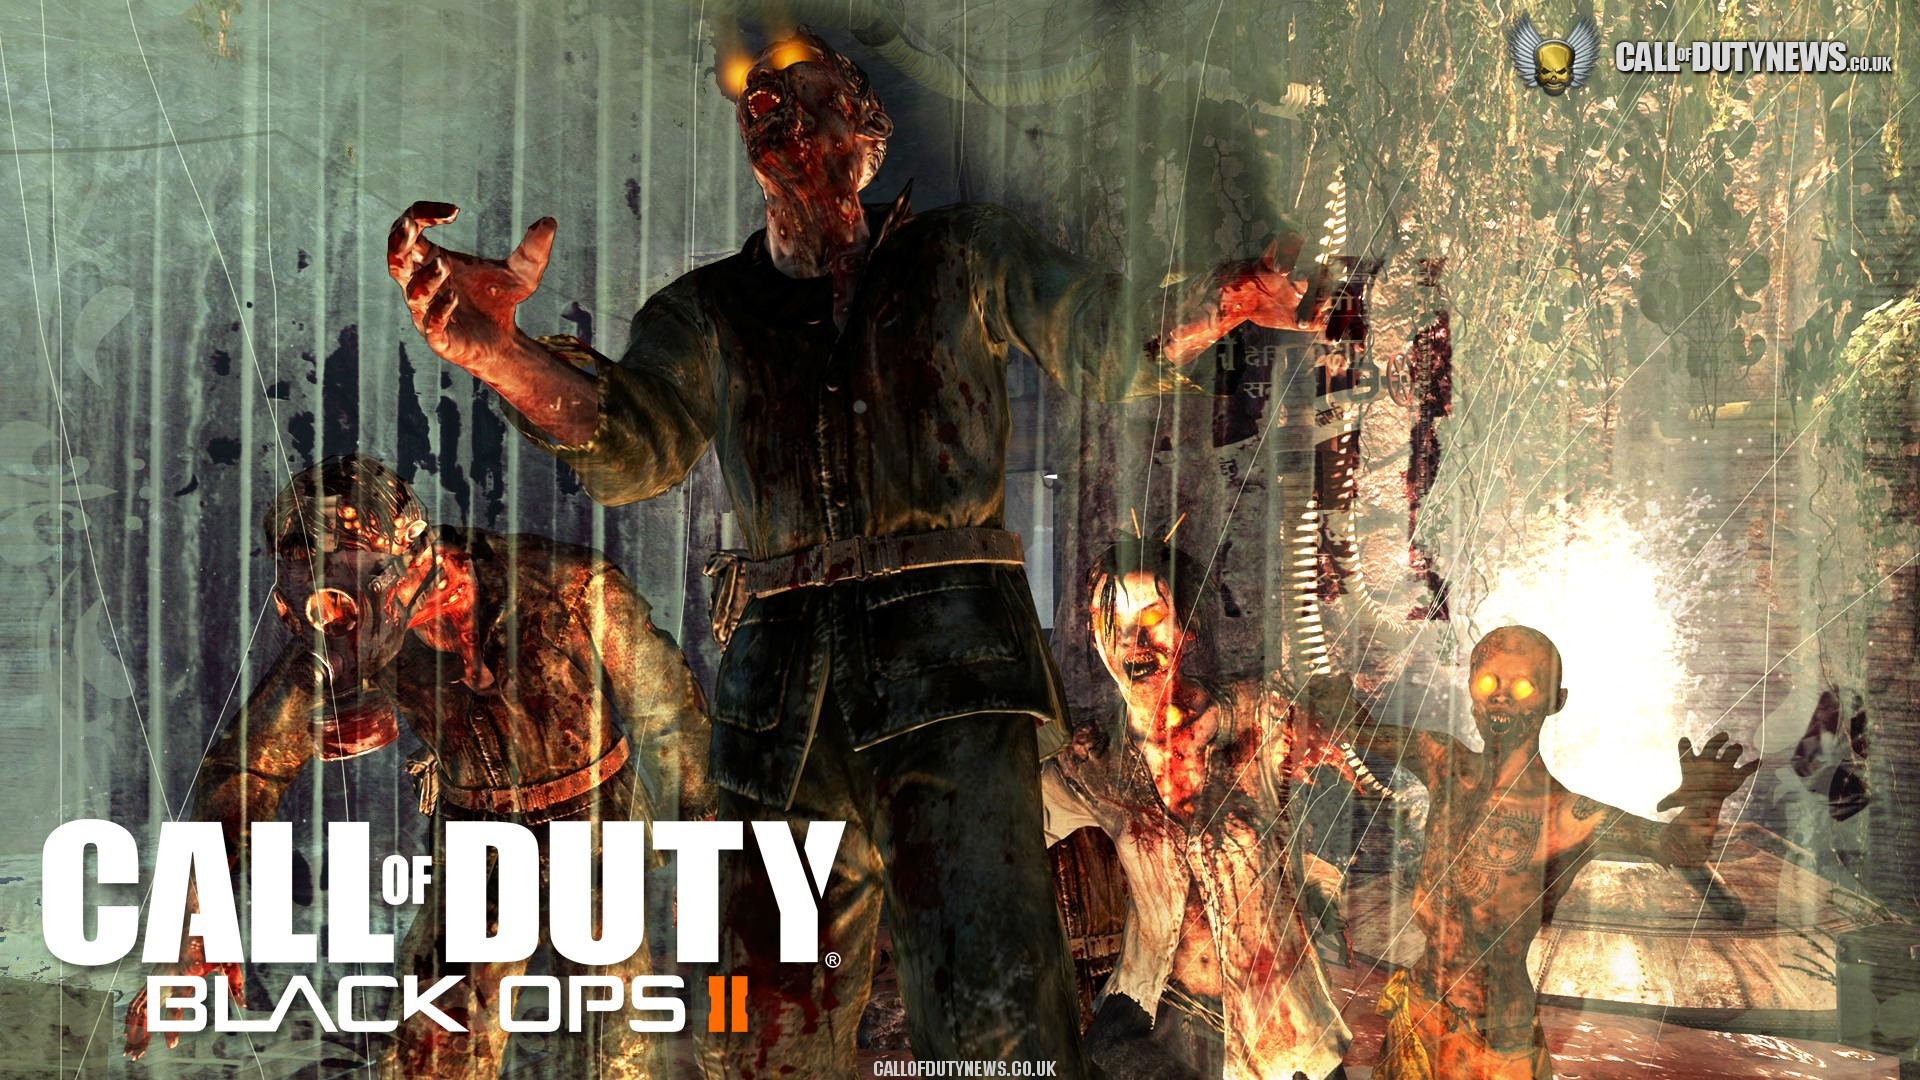 1920x1080 Call of duty black ops 3 zombies wallpaper – Free full hd ... | Download  Wallpaper | Pinterest